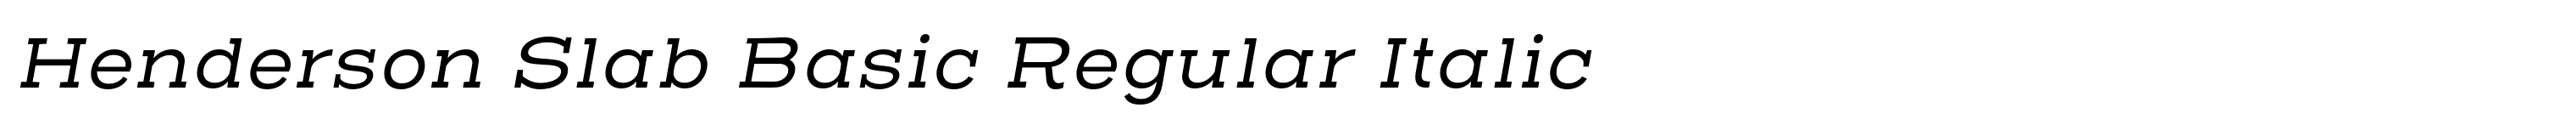 Henderson Slab Basic Regular Italic